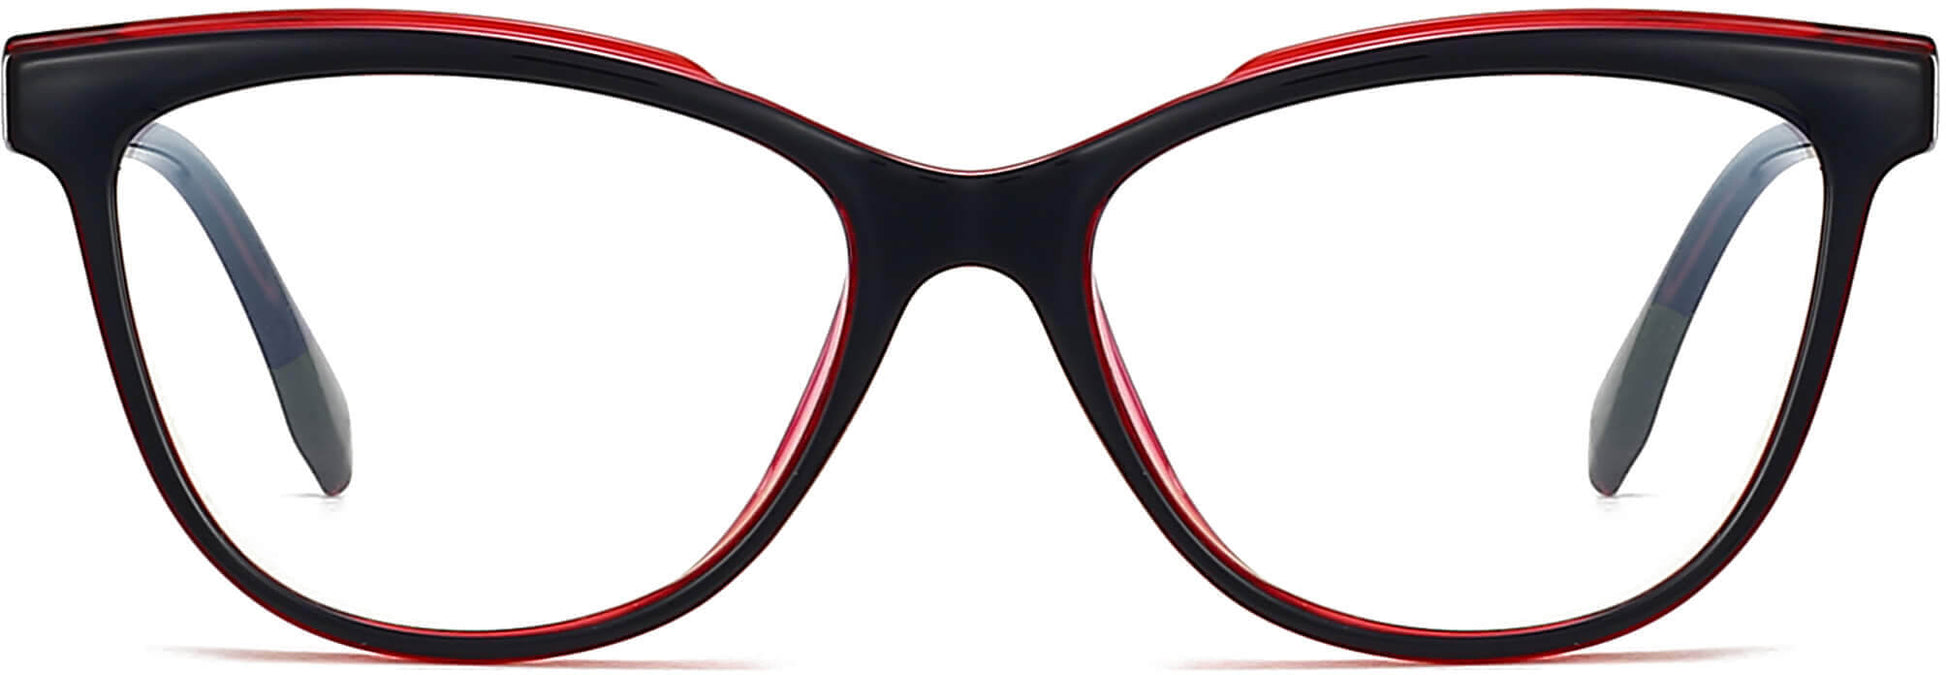 Stilsky Cateye Black Eyeglasses from ANRRI front view